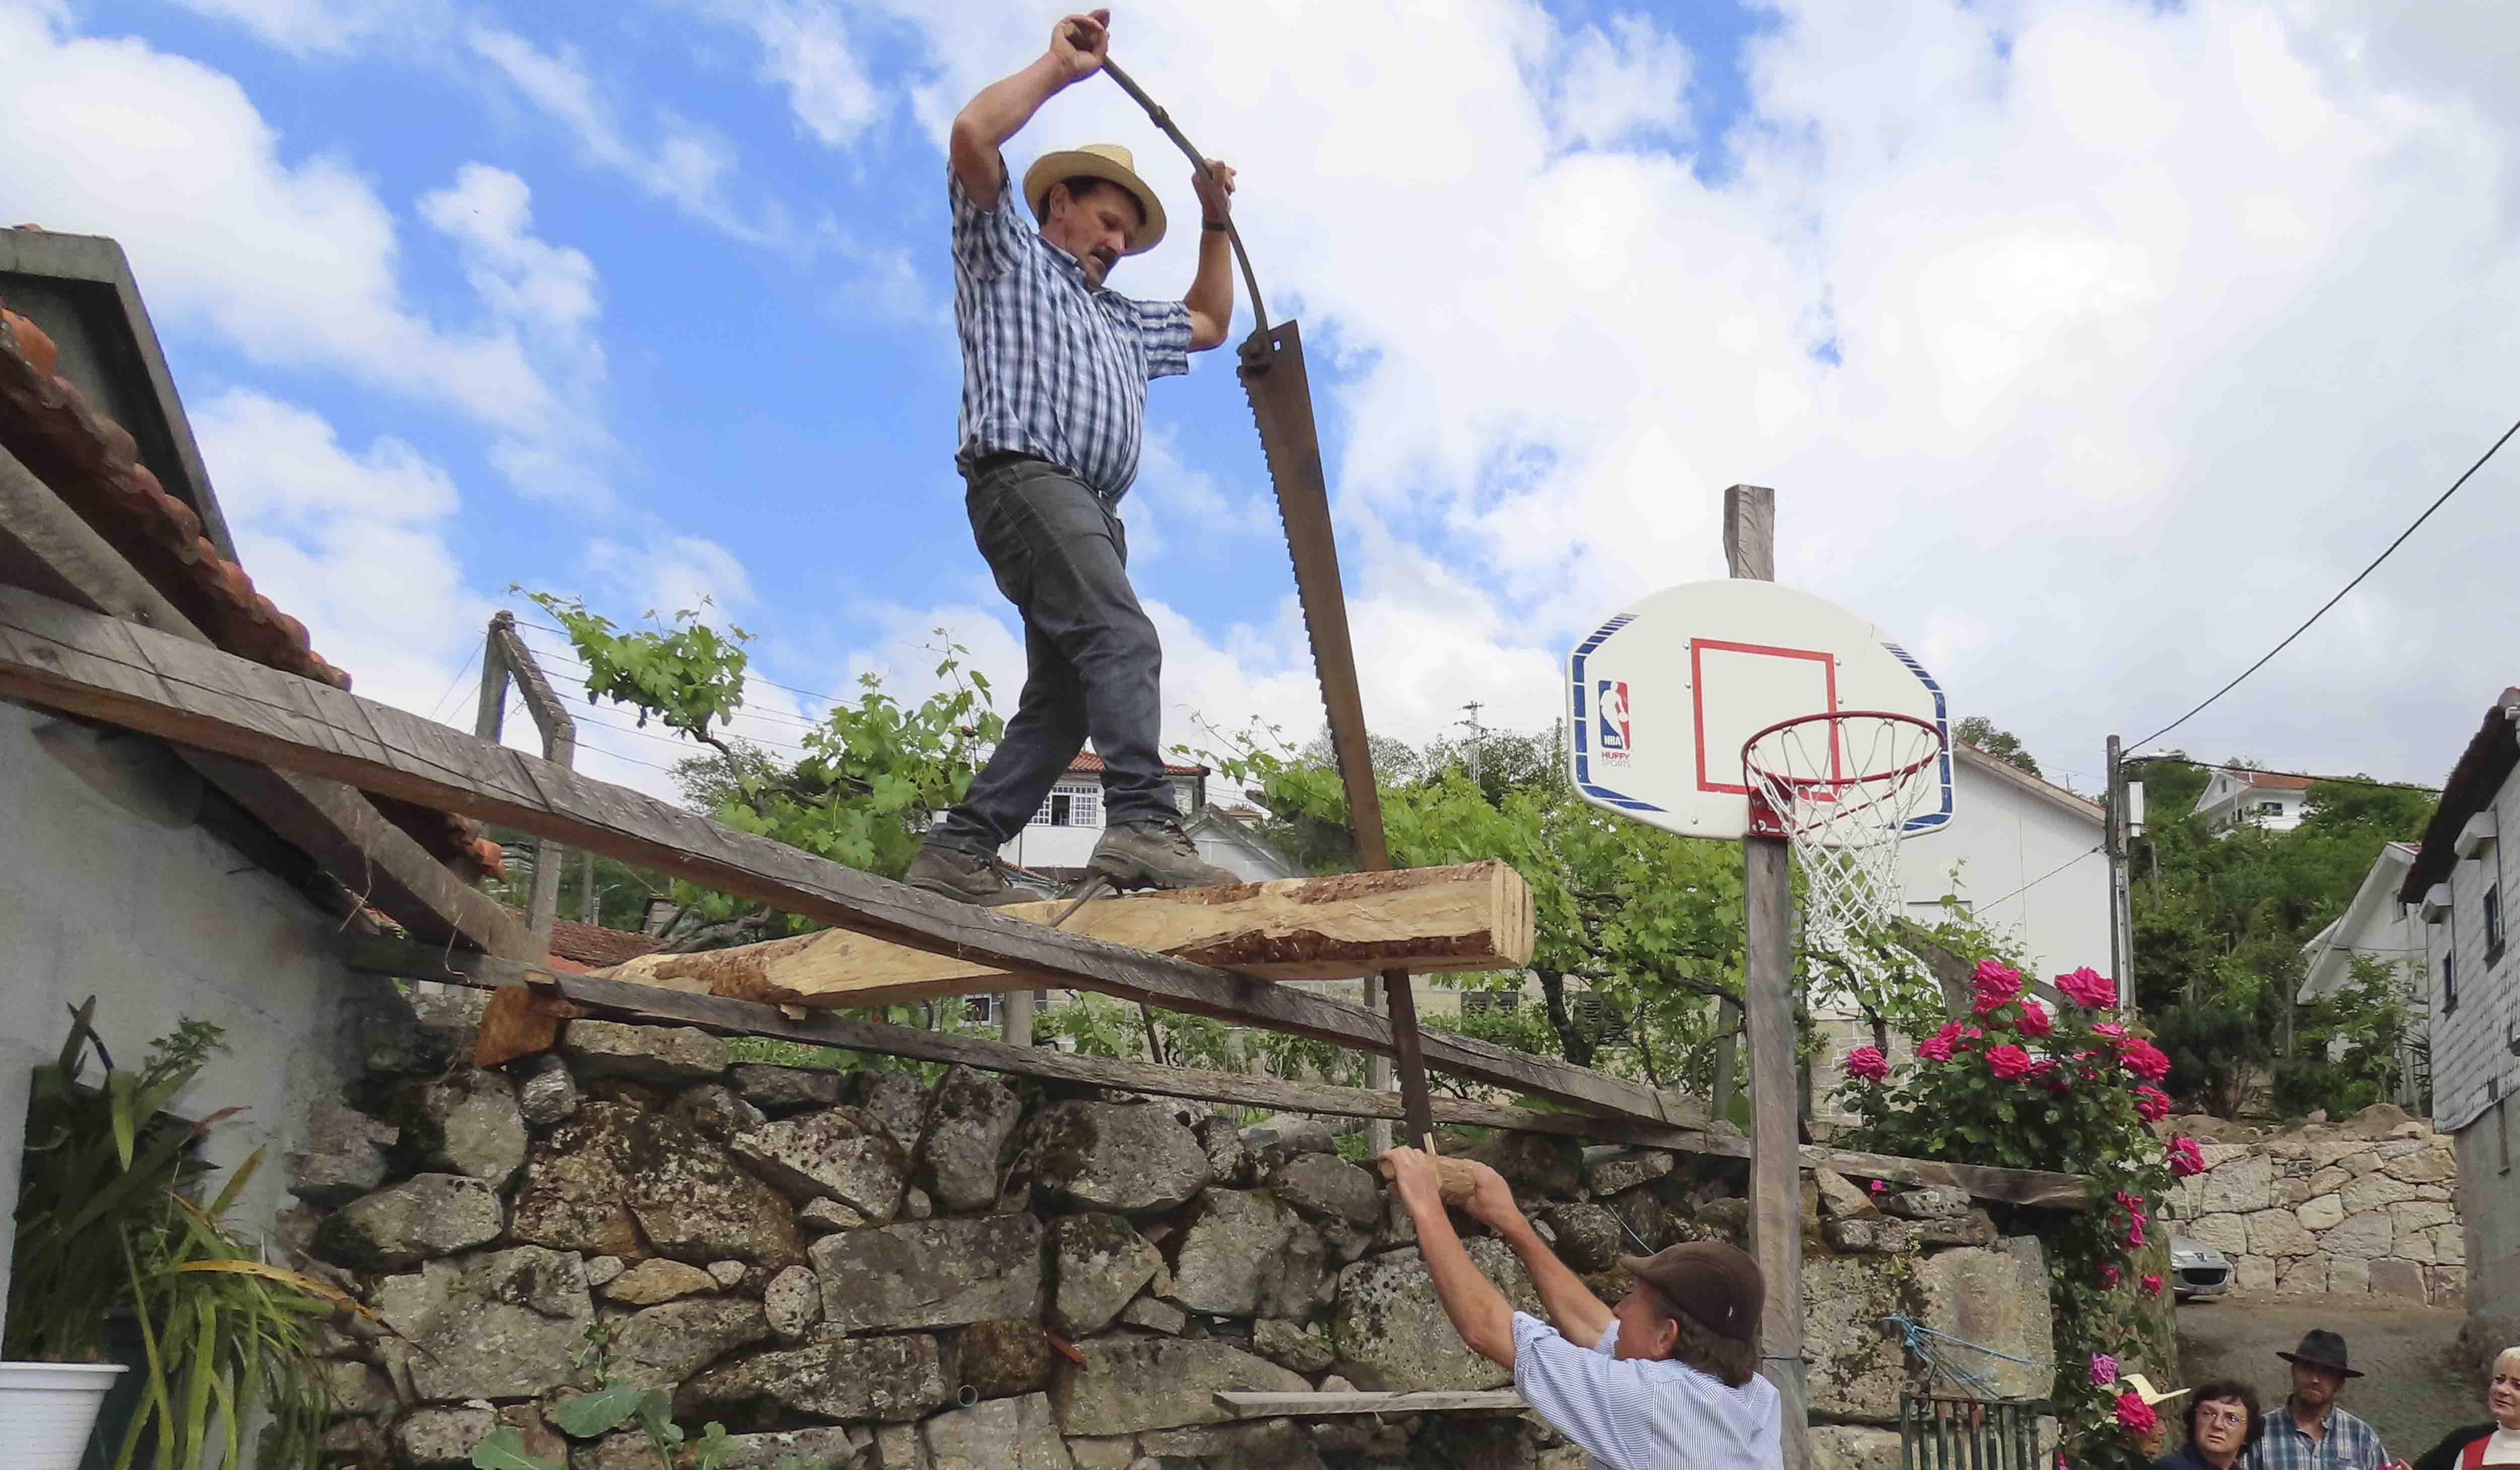 Festival Pés na Serra recupera tradições familiares